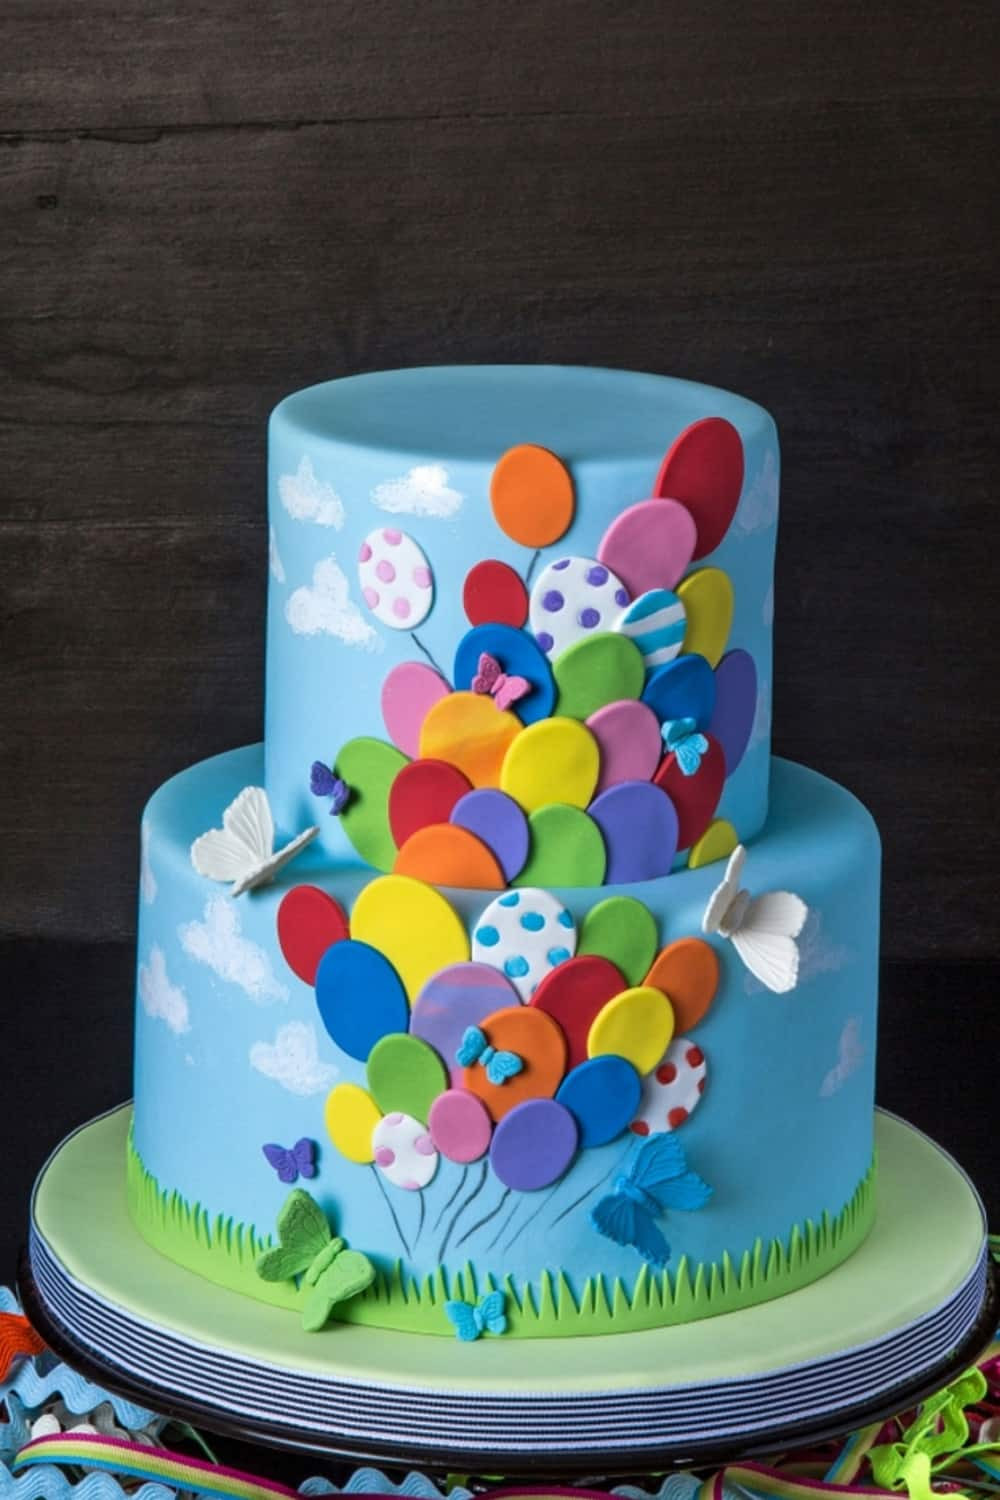 Balloon Birthday Cake
 BALLOONS – Ms B’s CAKERY